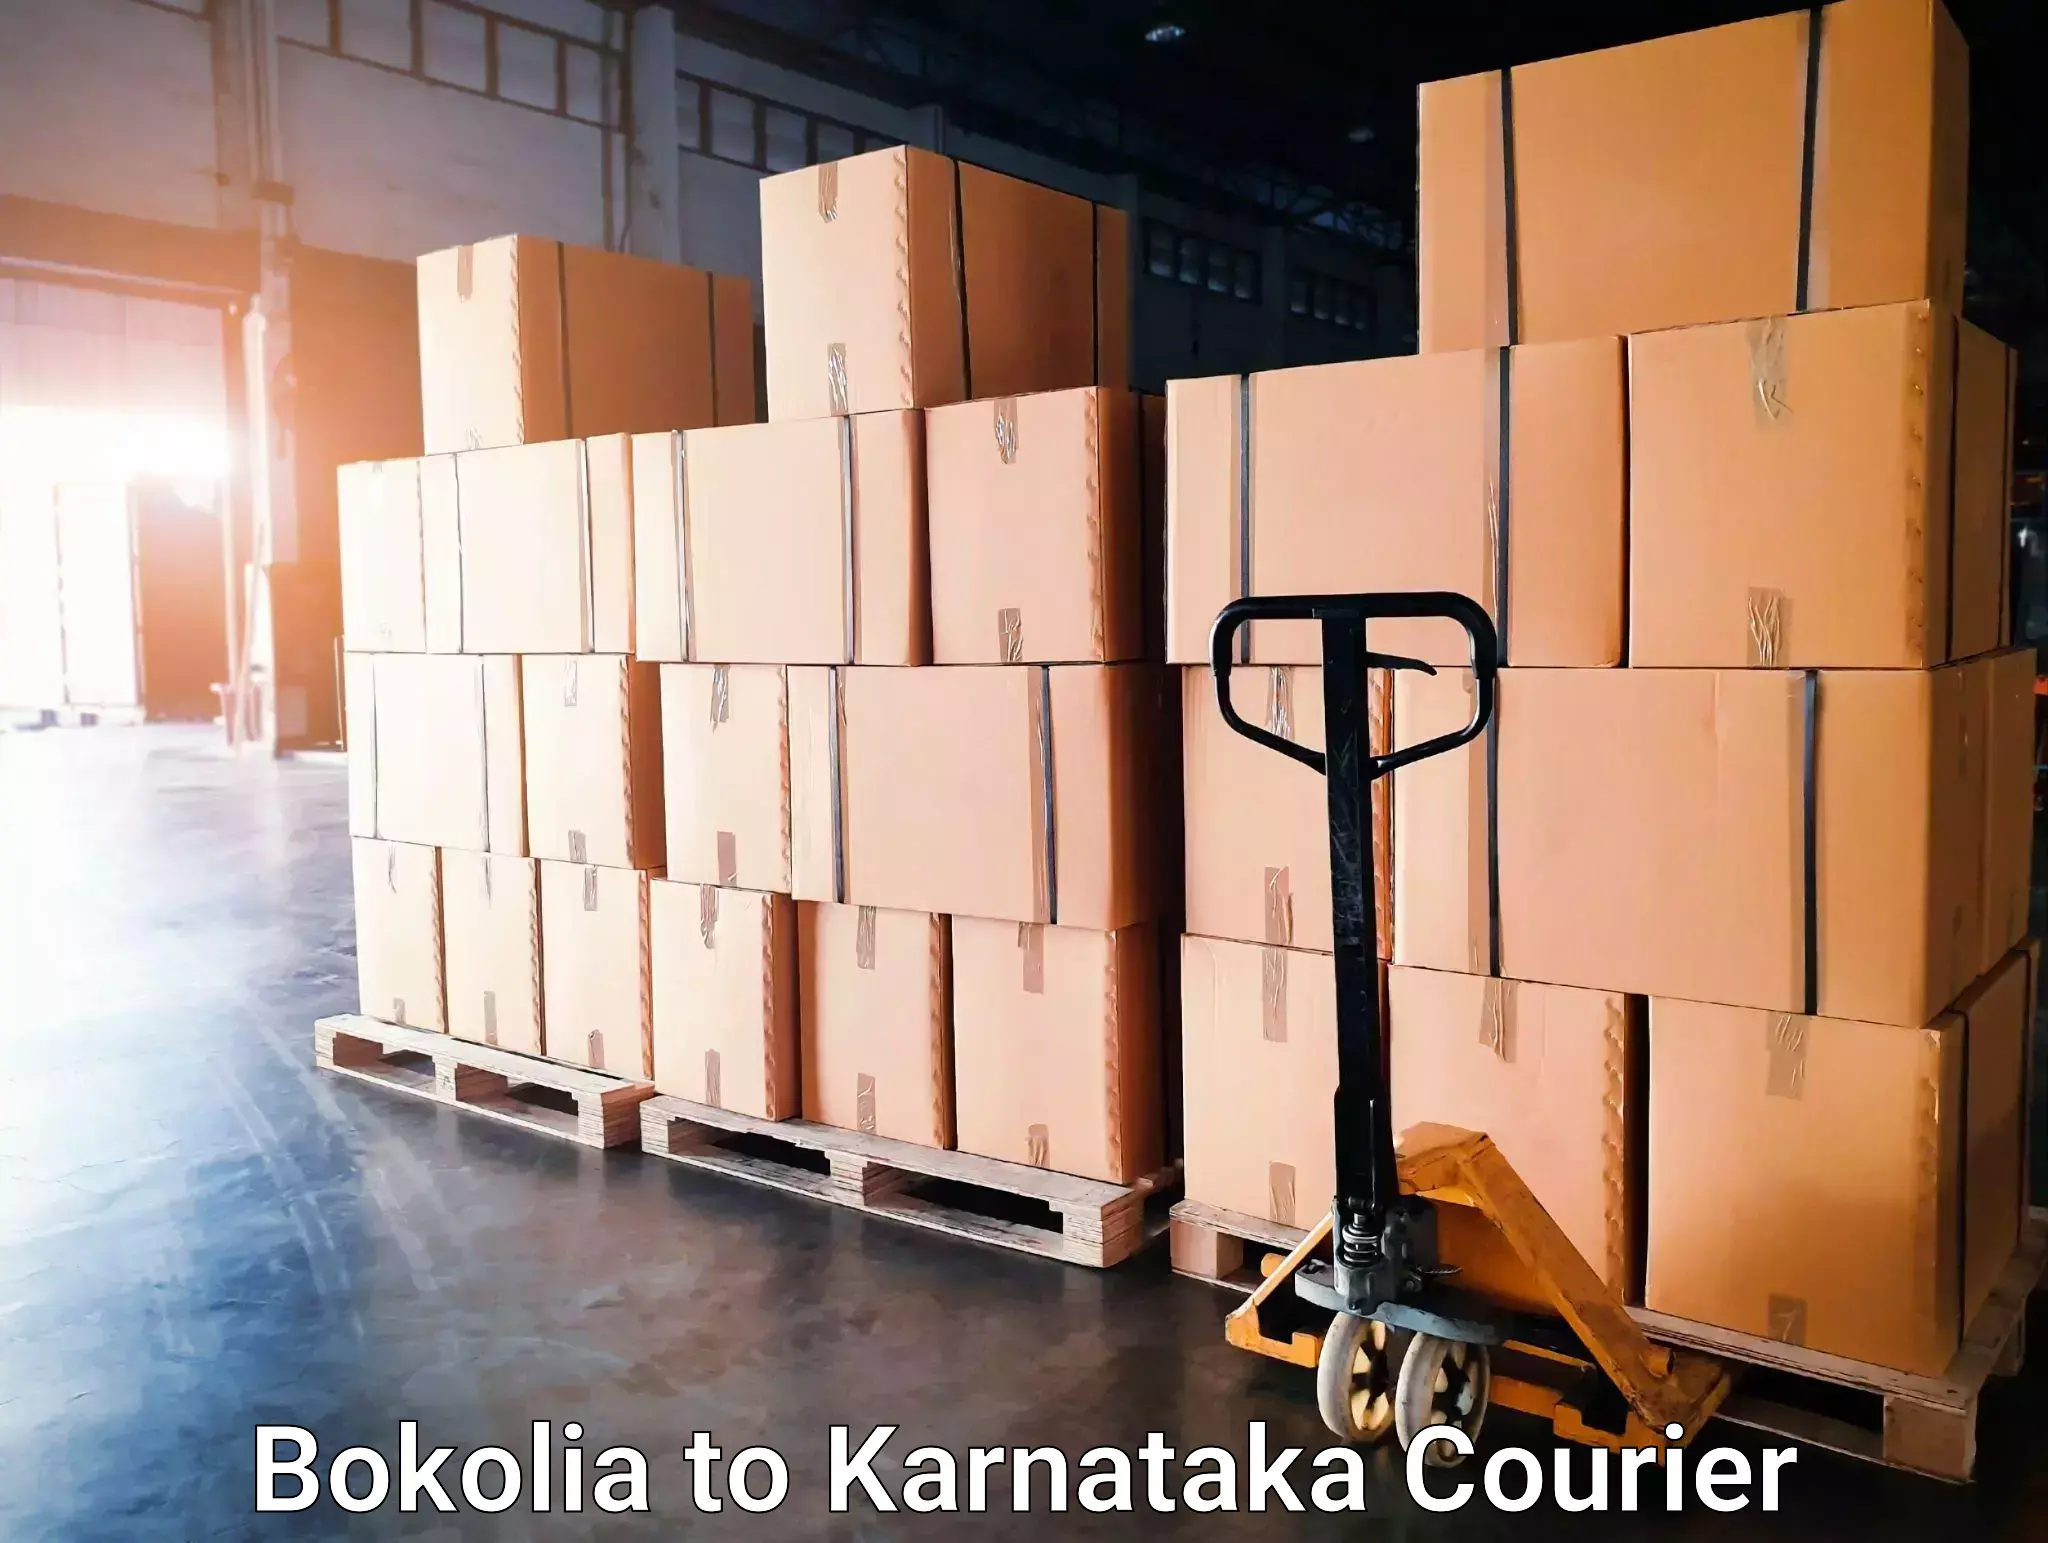 Flexible delivery schedules in Bokolia to Karnataka